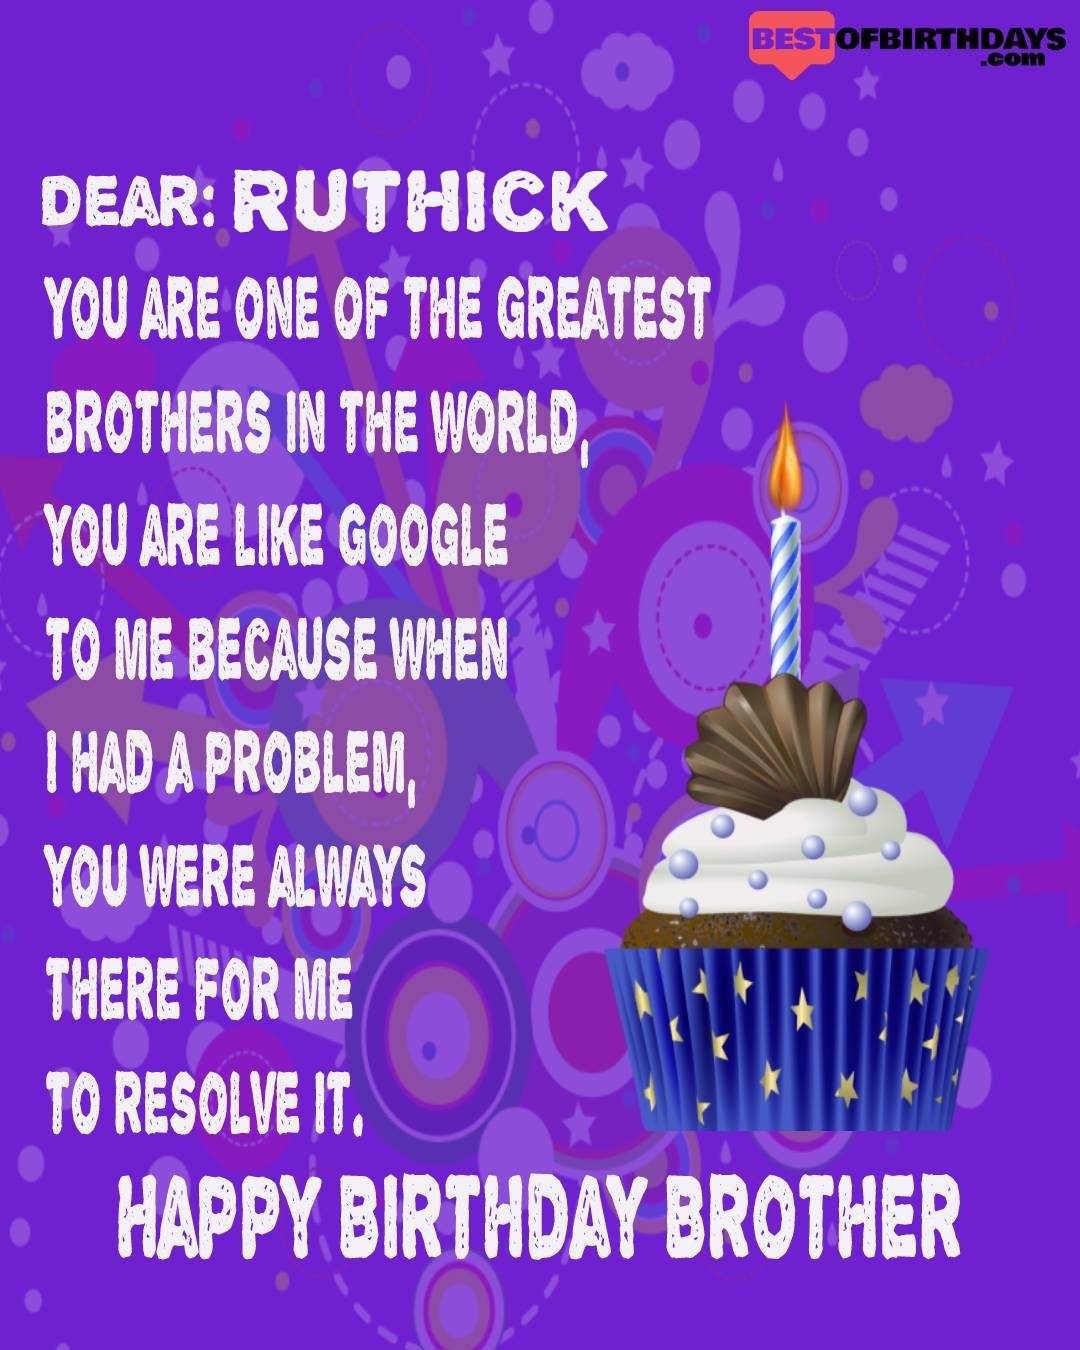 Happy birthday ruthick bhai brother bro